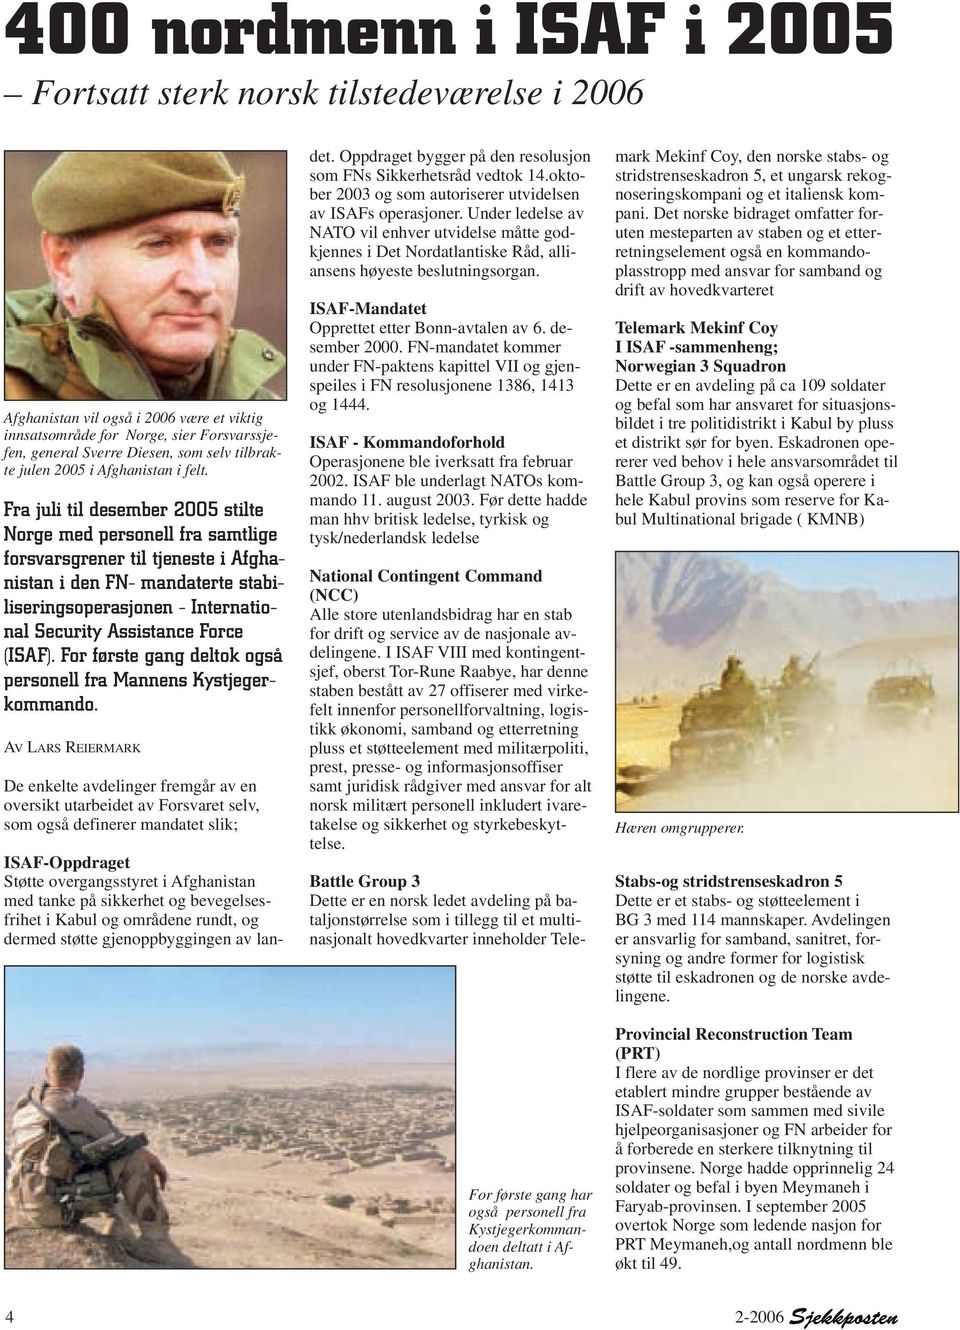 Fra juli til desember 2005 stilte Norge med personell fra samtlige forsvarsgrener til tjeneste i Afghanistan i den FN- mandaterte stabiliseringsoperasjonen - International Security Assistance Force